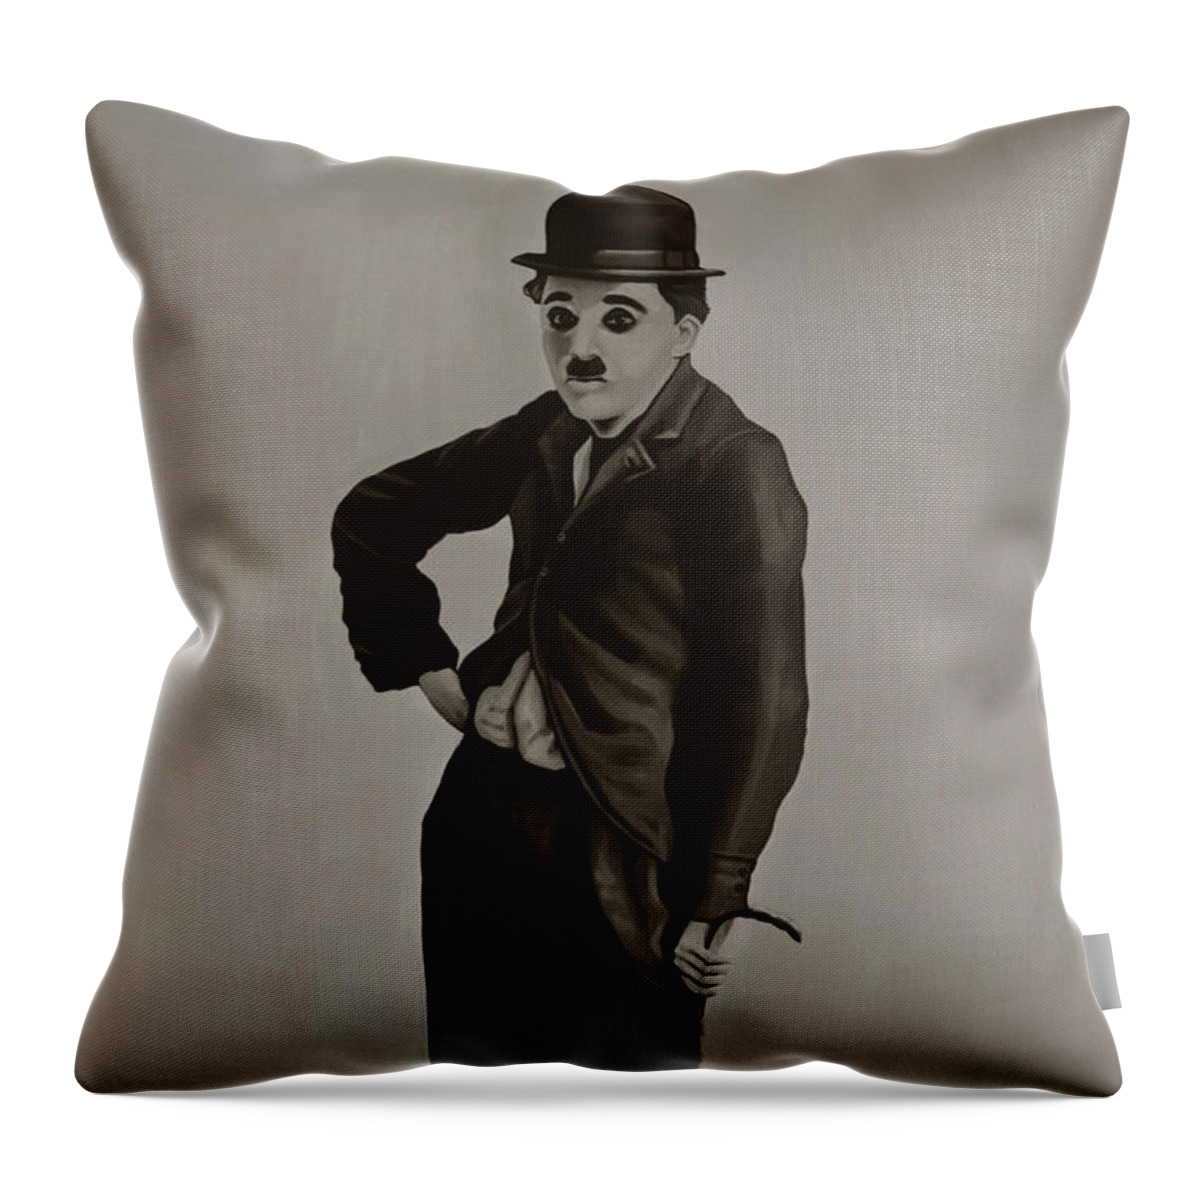 Charlie Chaplin Throw Pillow featuring the painting Charlie Chaplin Painting by Paul Meijering